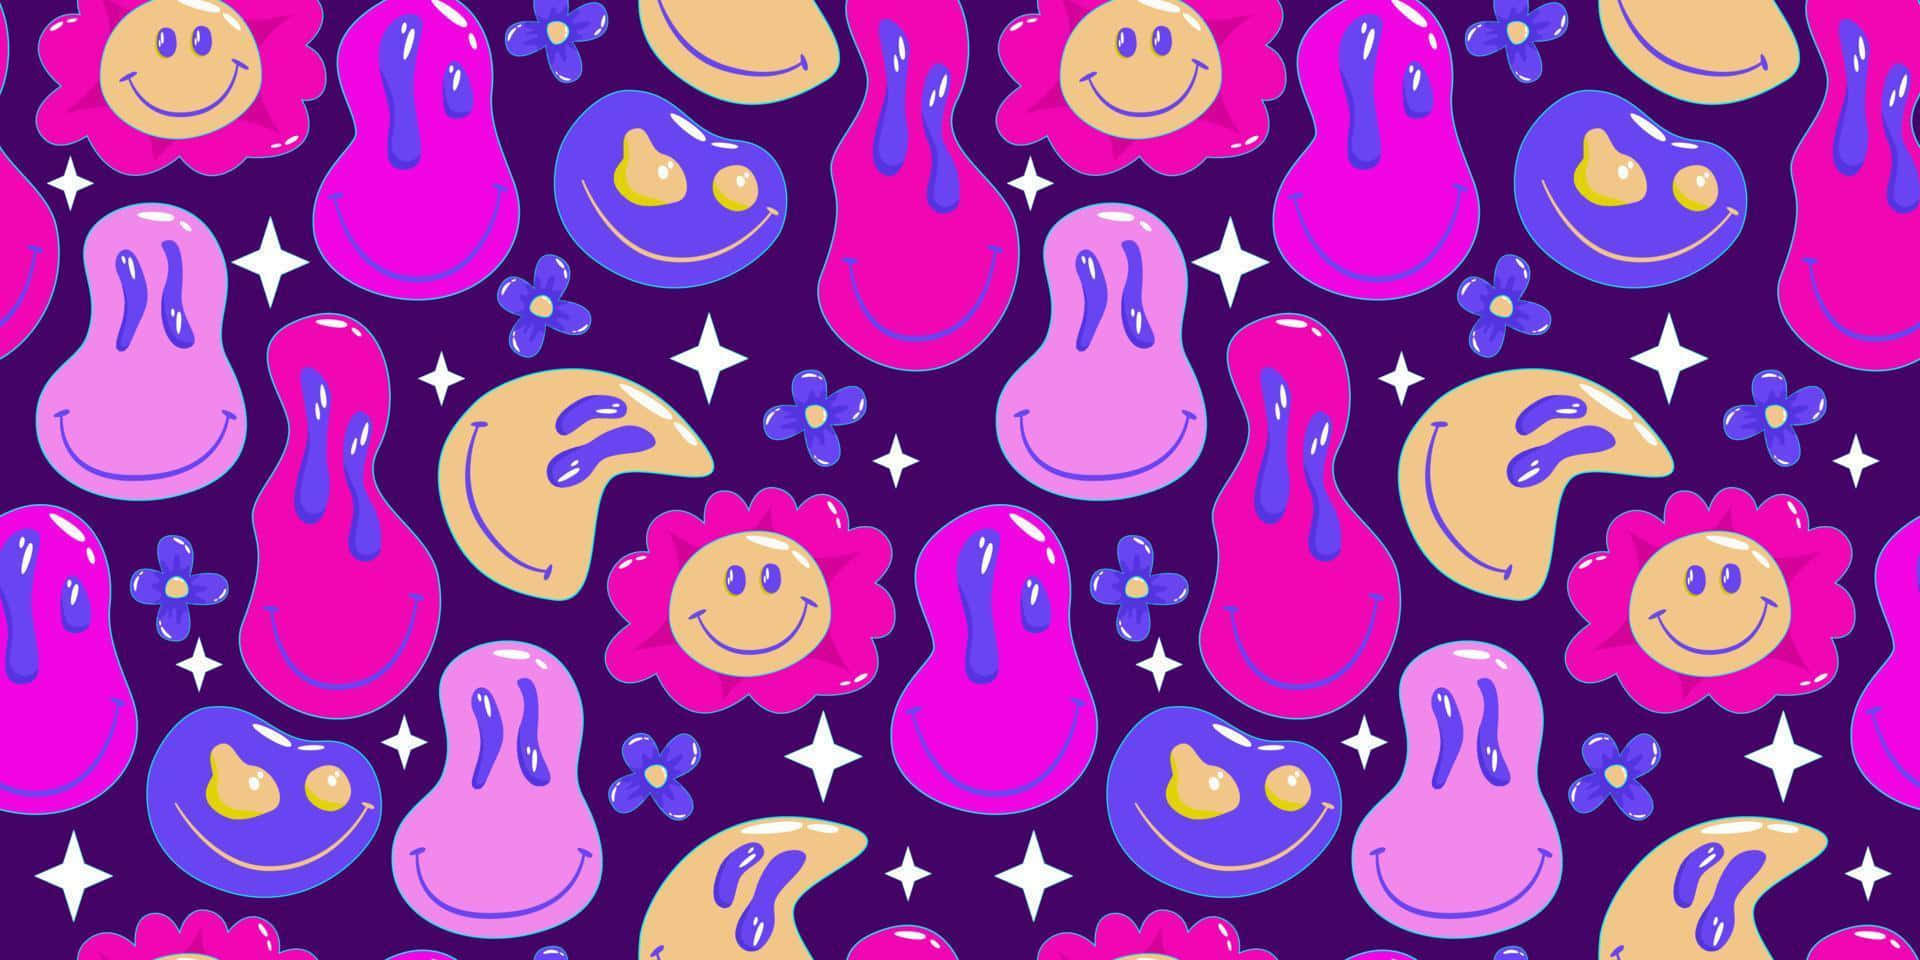 Happy Pyschedelic Y2k Seamless Aesthetic Trippy Smiley Face Wallpaper